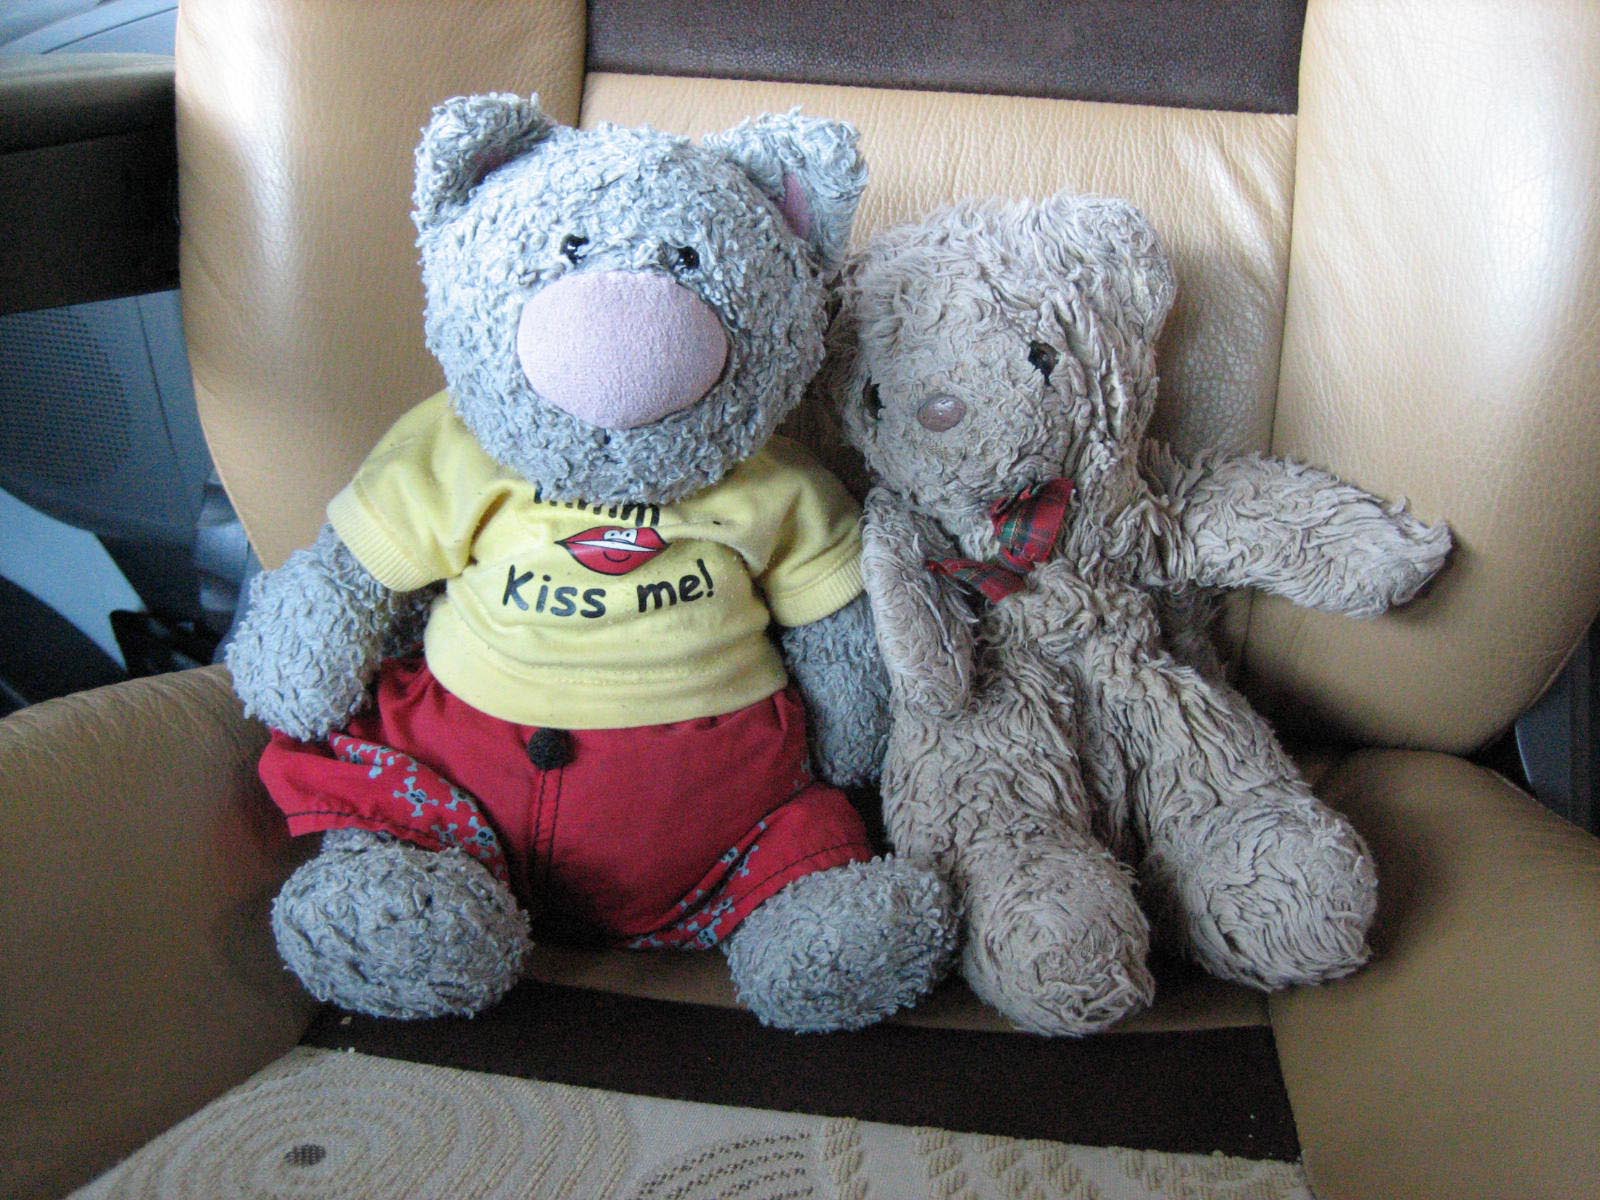 Wyman's teddy bears: Harry and Bonnie.